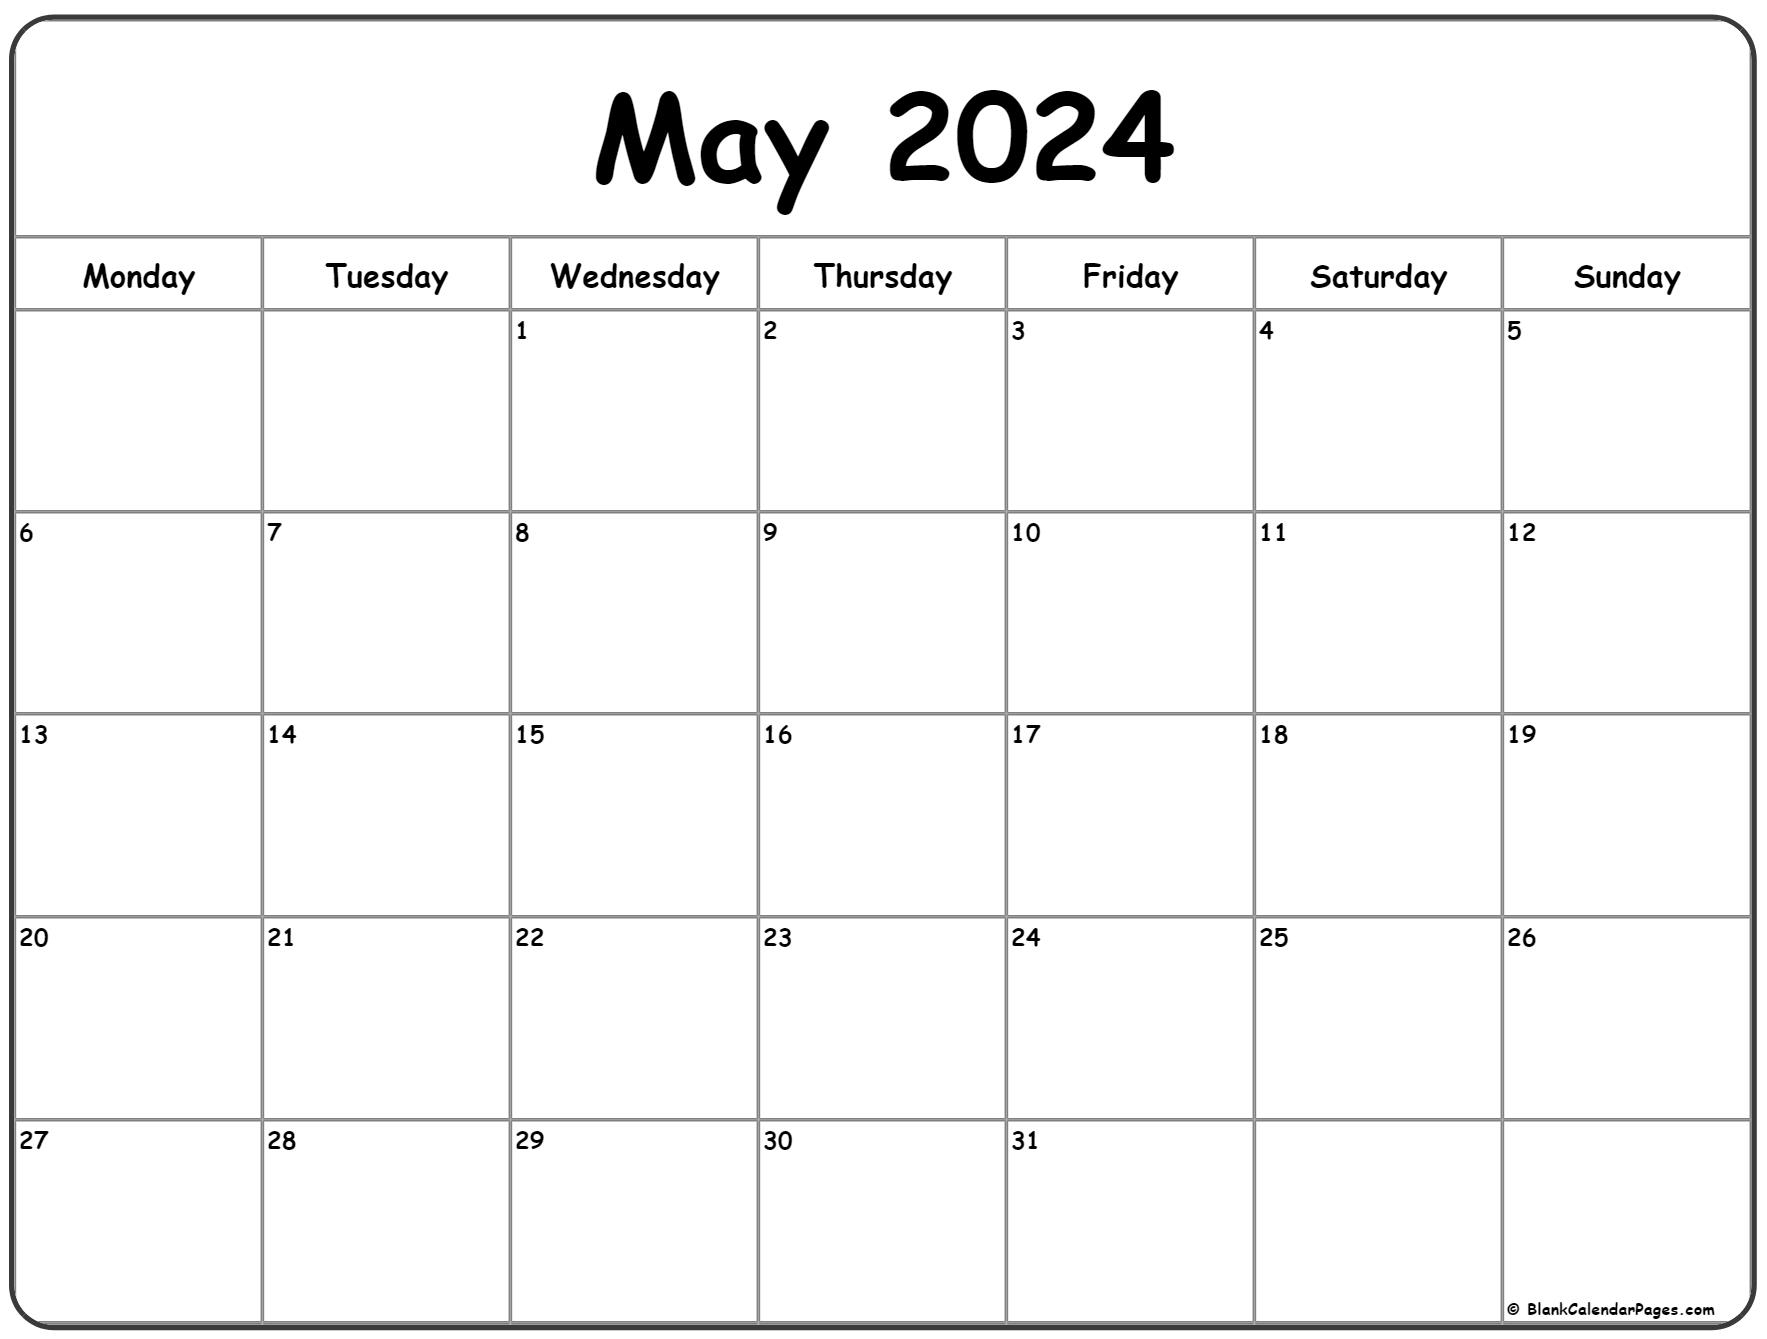 May 2024 Monday Calendar | Monday To Sunday for May Blank Calendar 2024 Printable